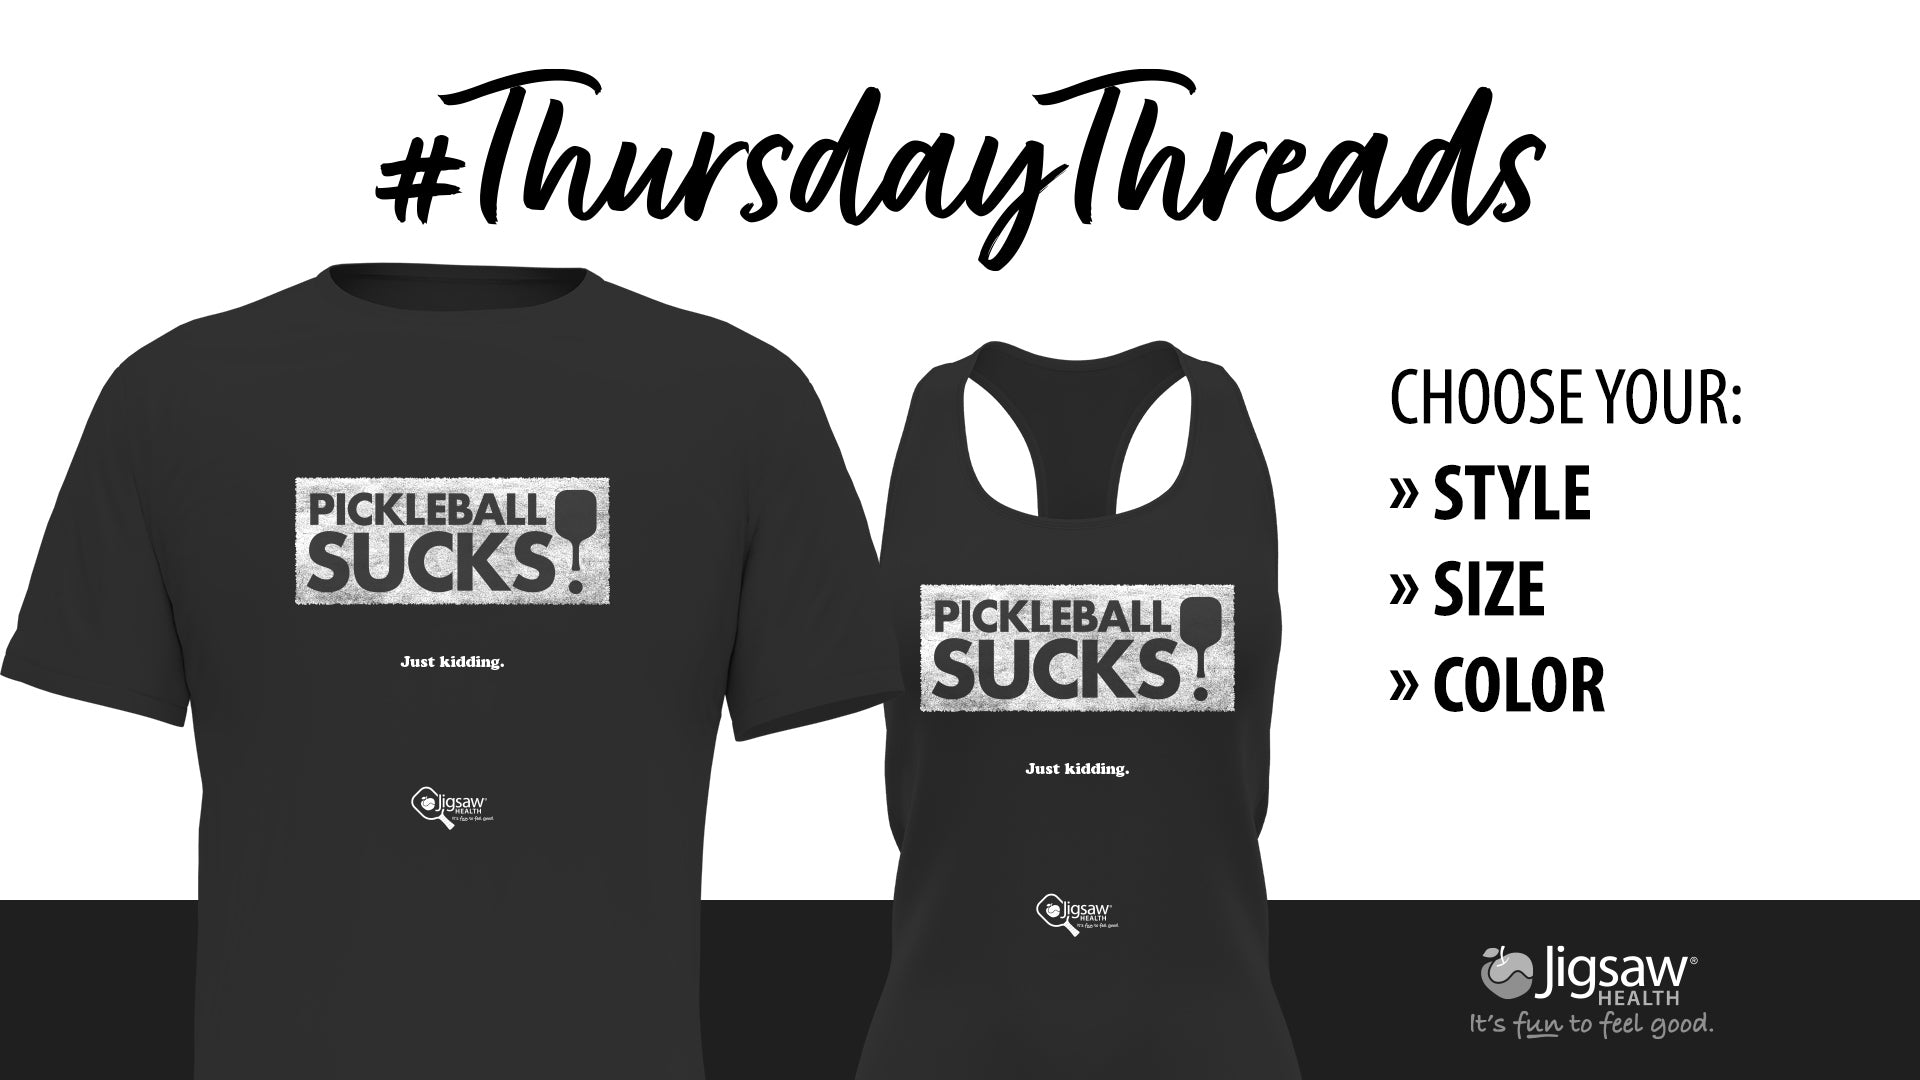 Pickleball Sucks... Just Kidding. | #ThursdayThreads